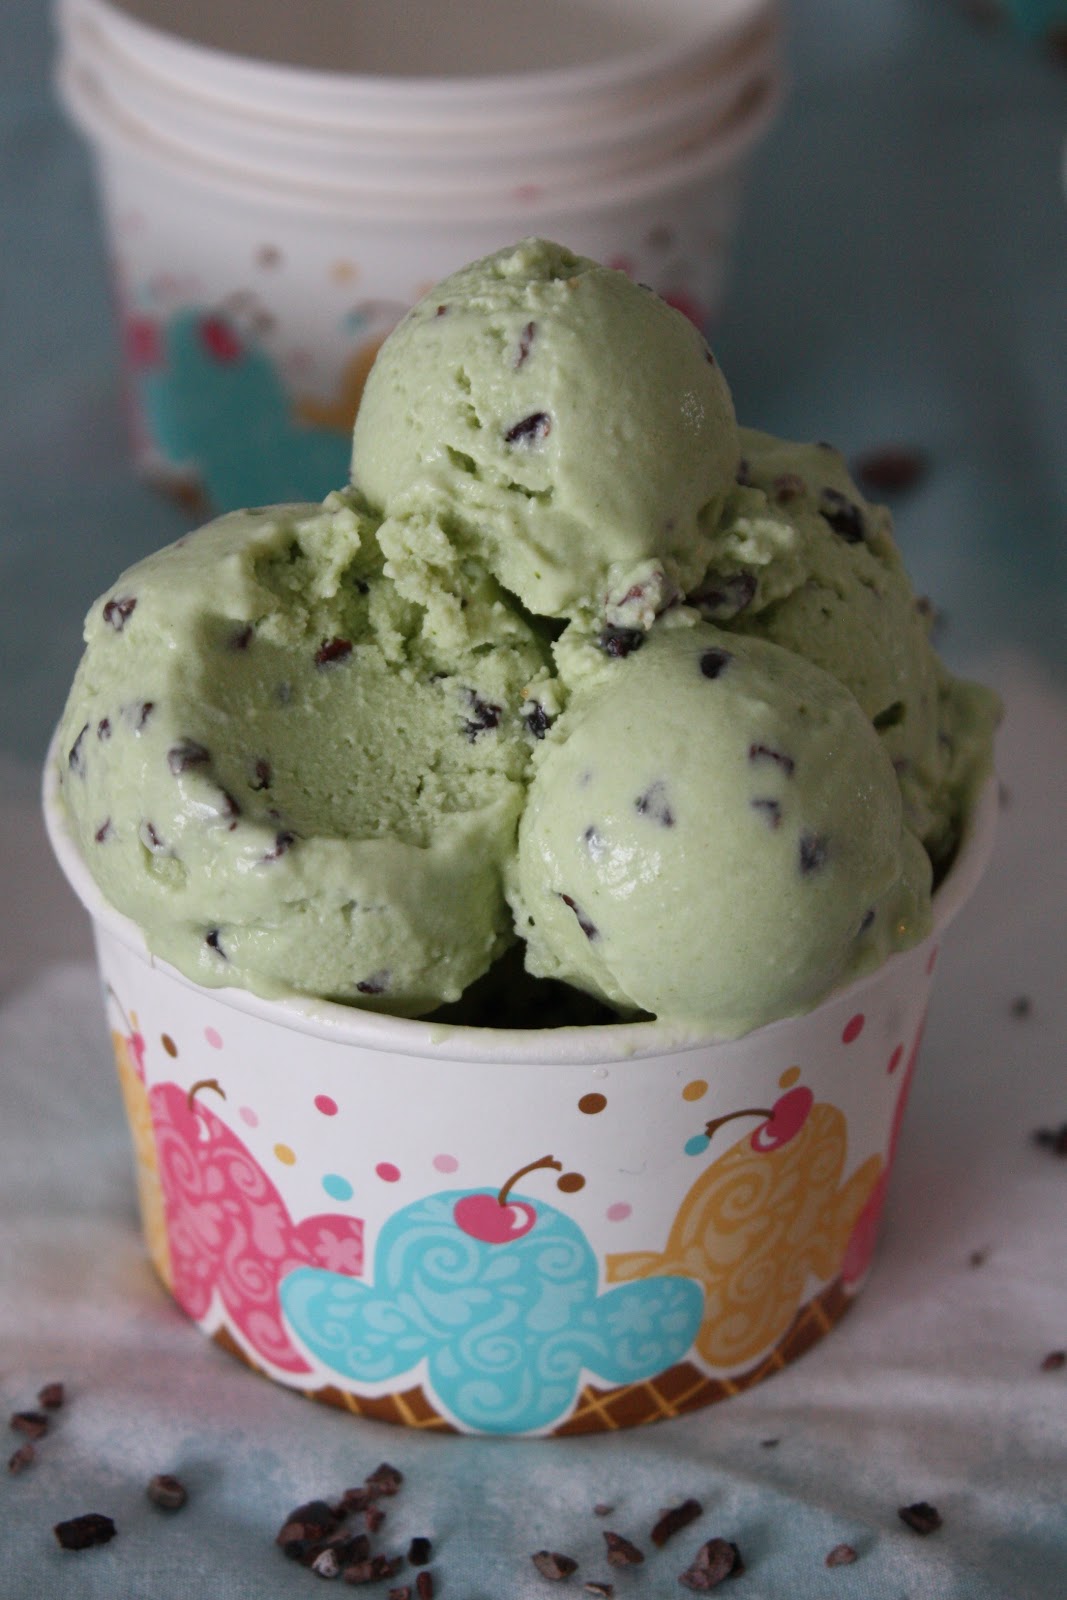 'After dinner mint' ice cream chocolate mint, using Arnott's Mint